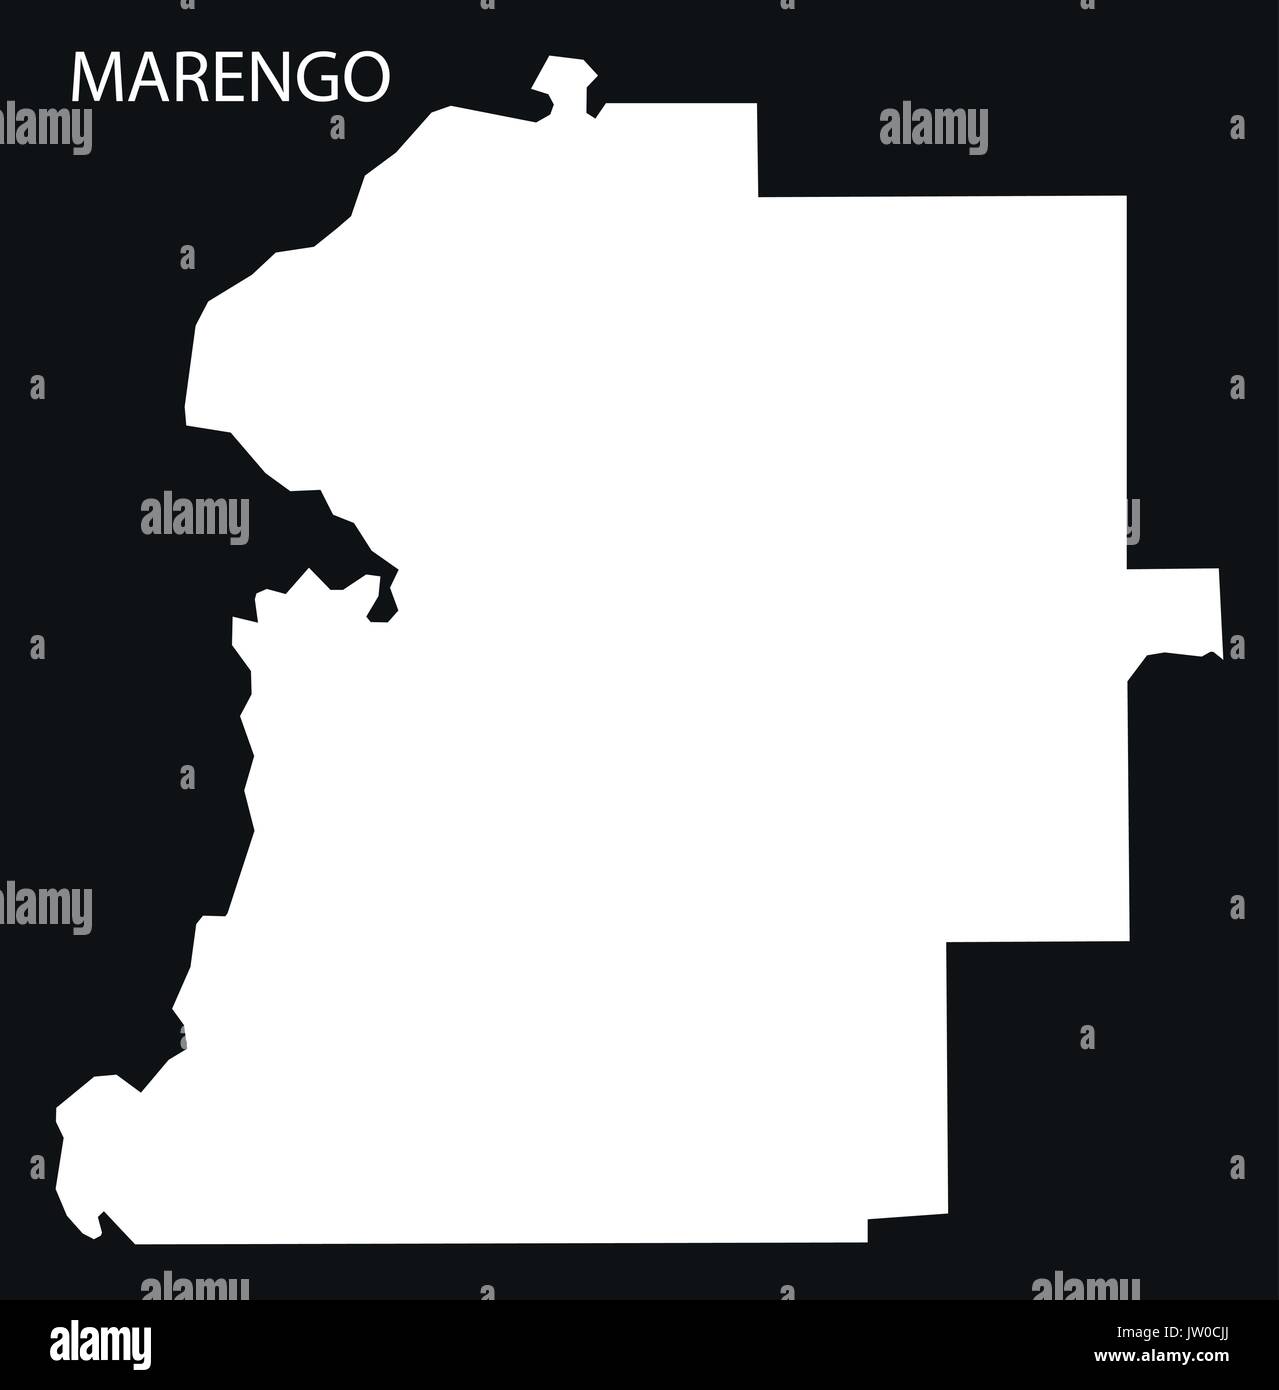 Marengo county map of Alabama USA black inverted illustration Stock Vector